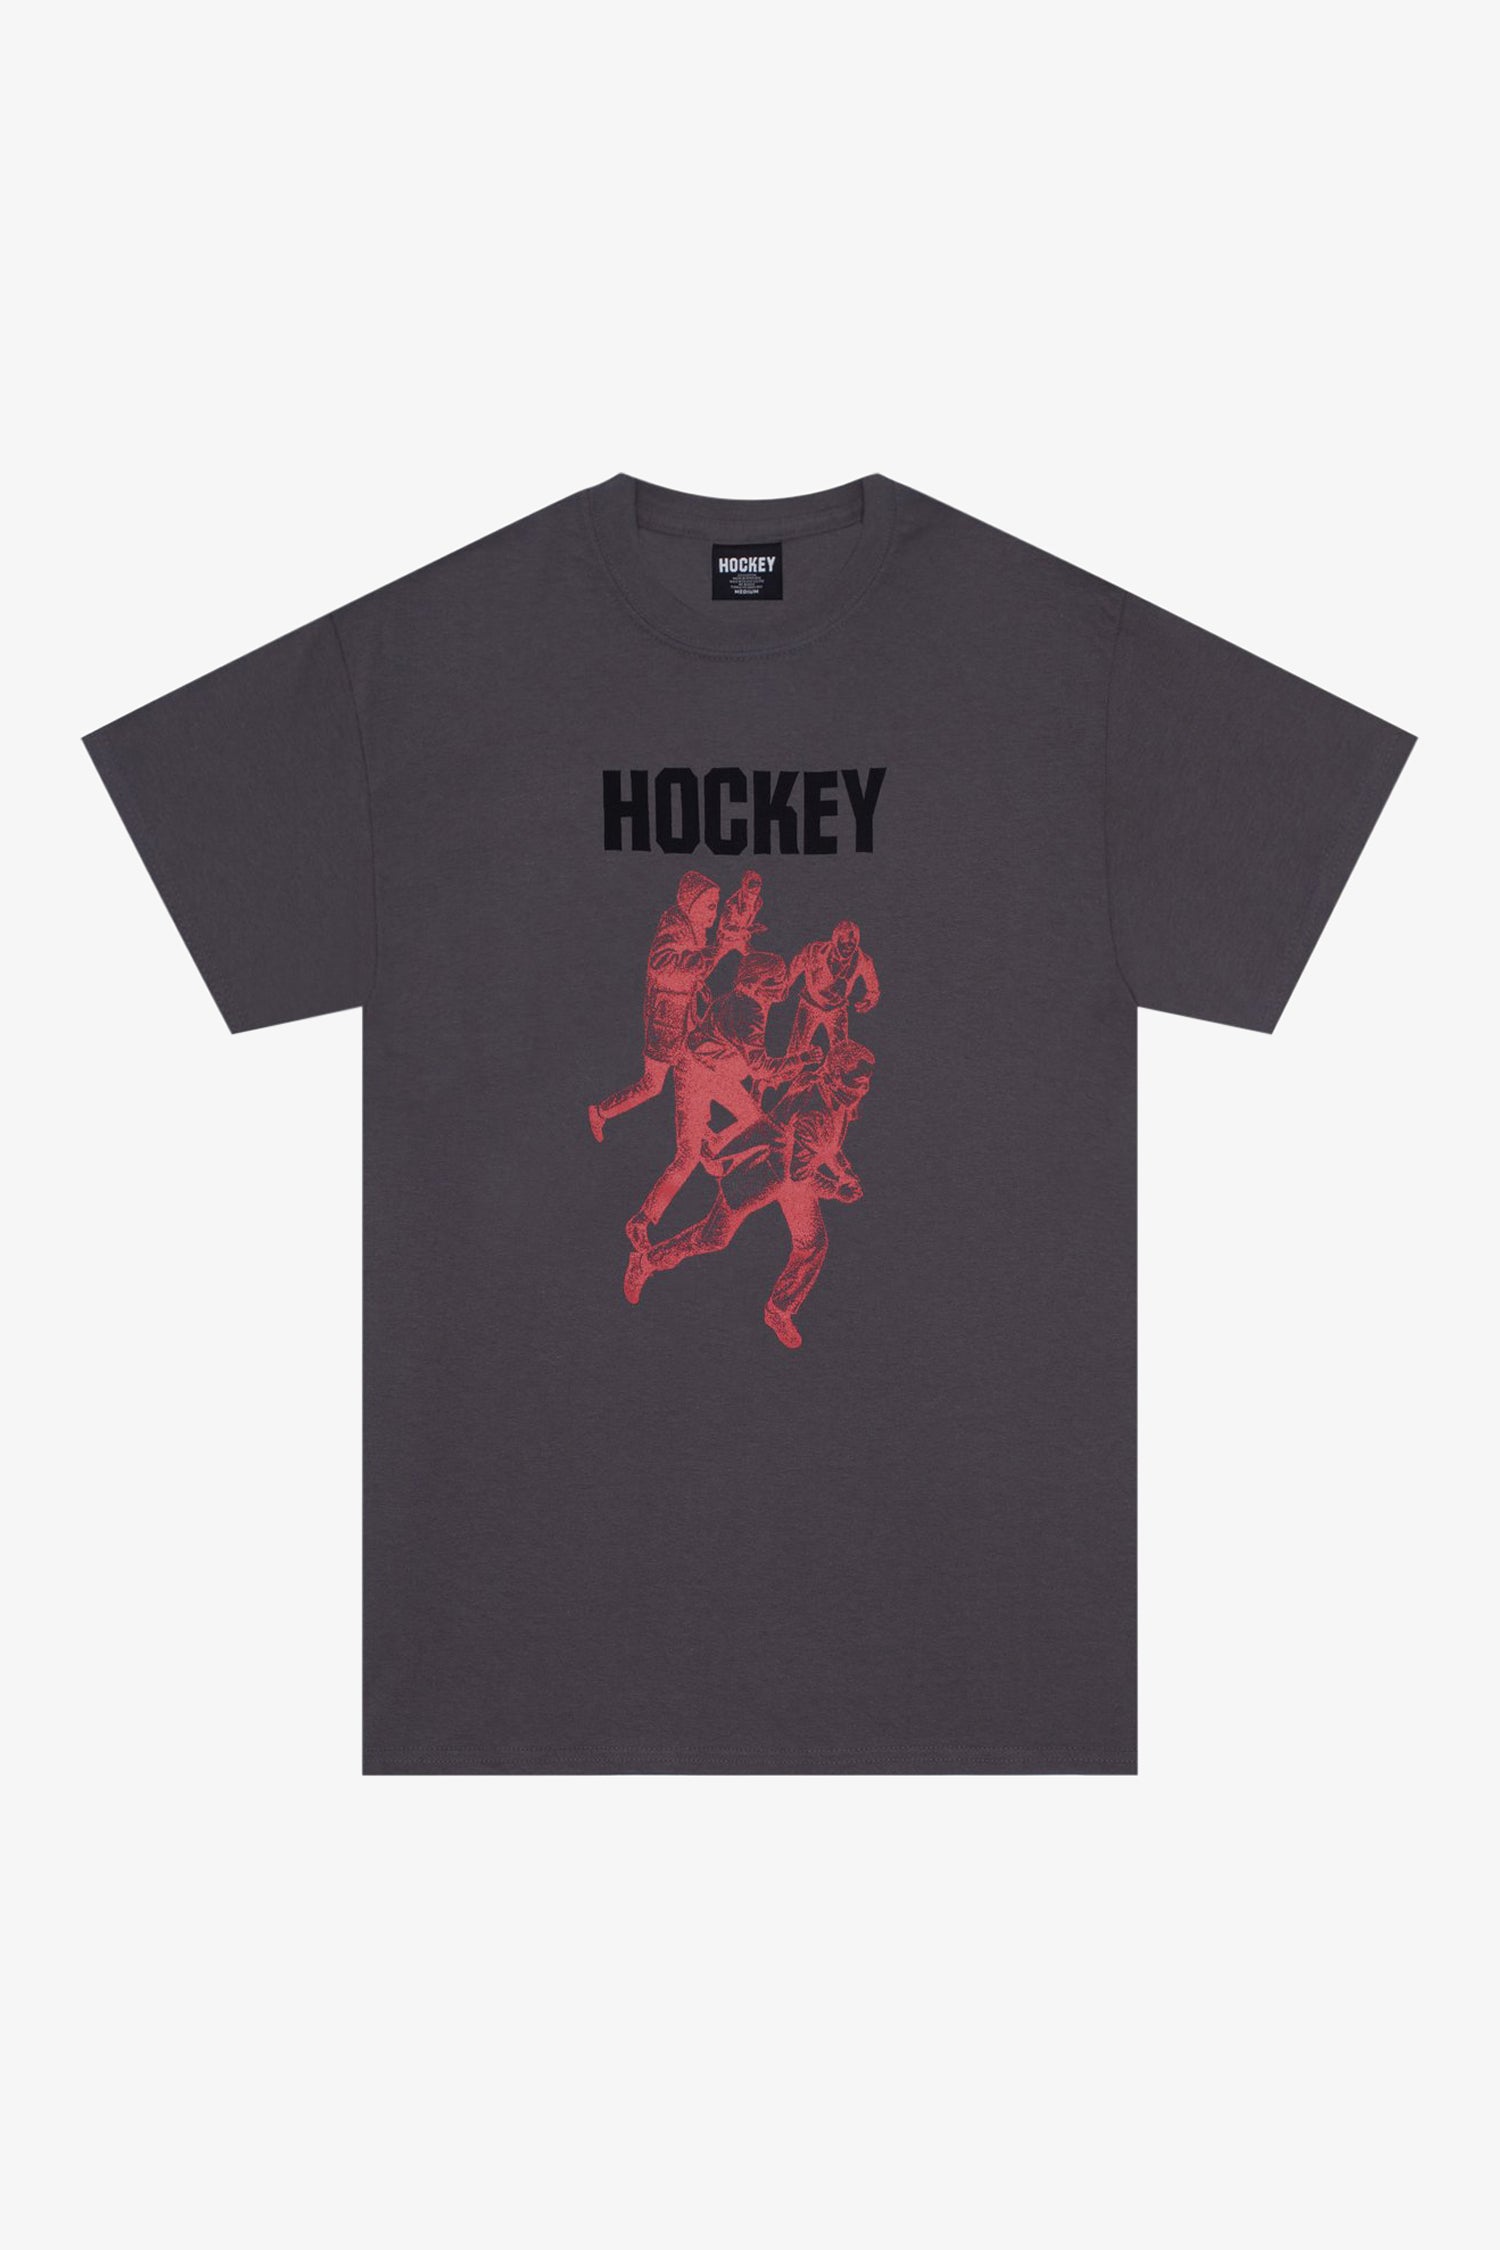 Selectshop FRAME - Hockey Vandals Tee T-Shirts Dubai